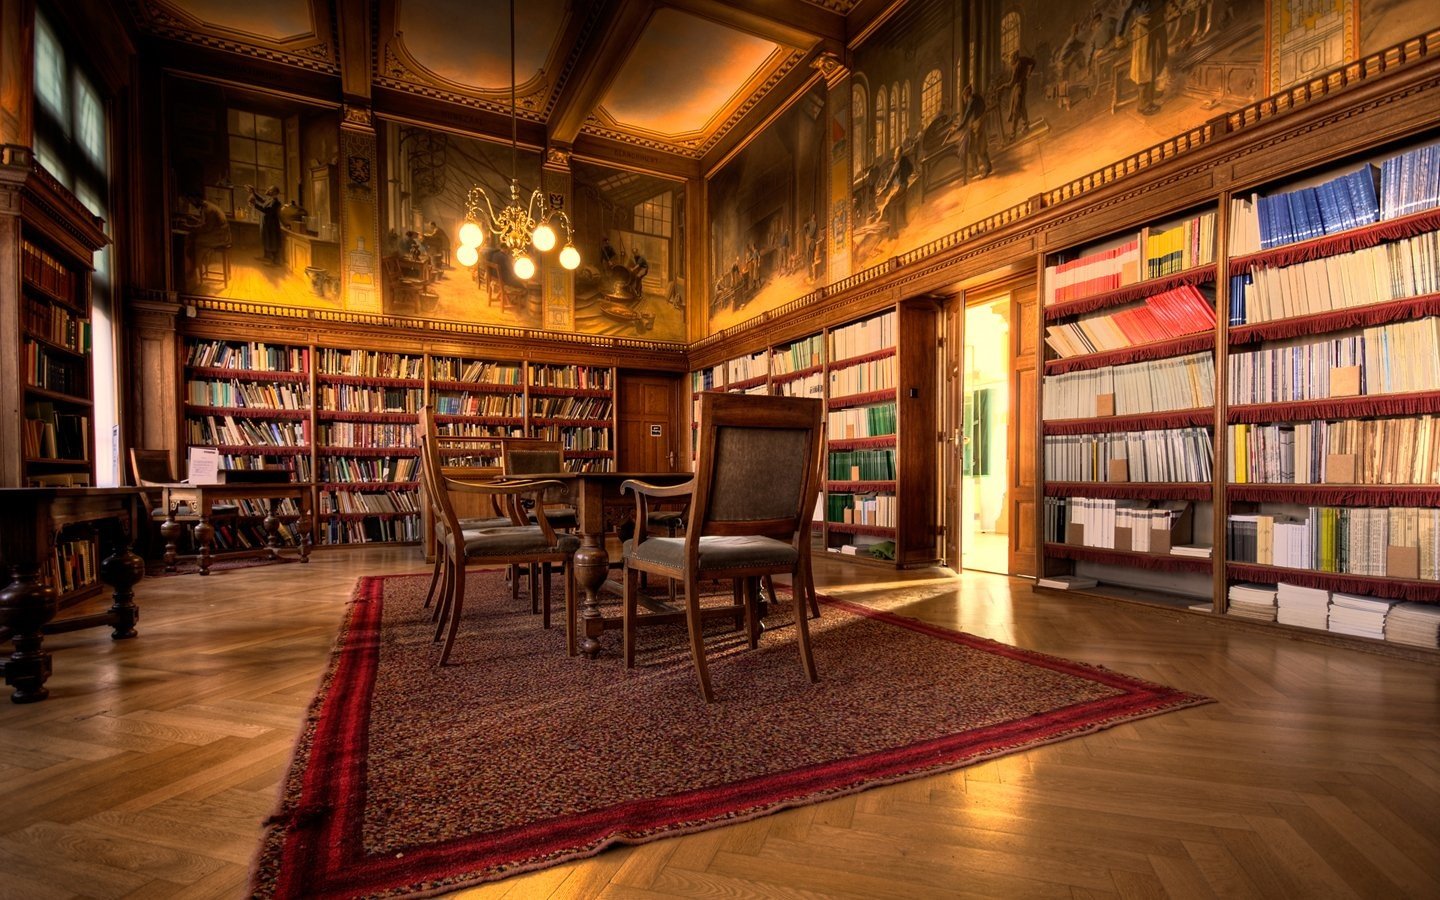 indoors, Room, Library, Brown, Books, Interior, Chairs, Bookshelf, Rugs Wallpaper